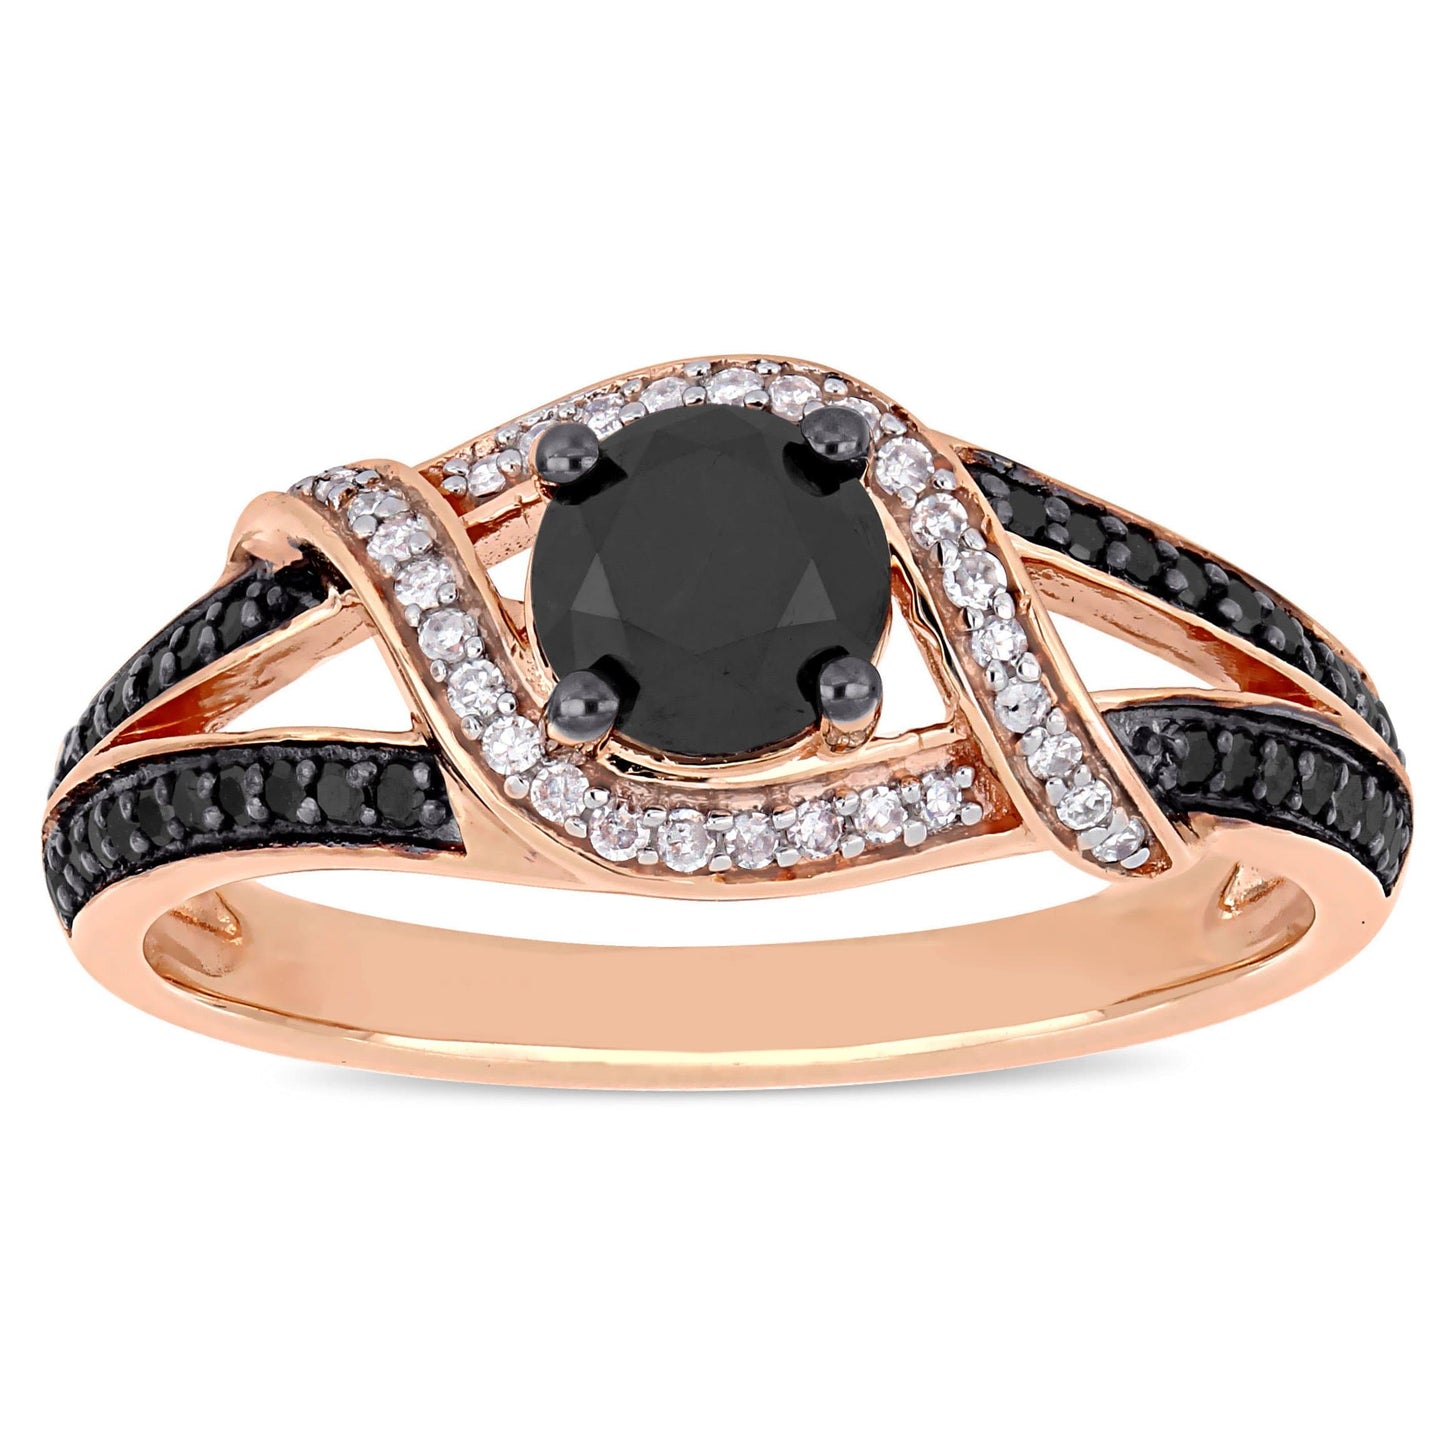 Julie Leah Black & White Diamond Ring in 10k Rose Gold